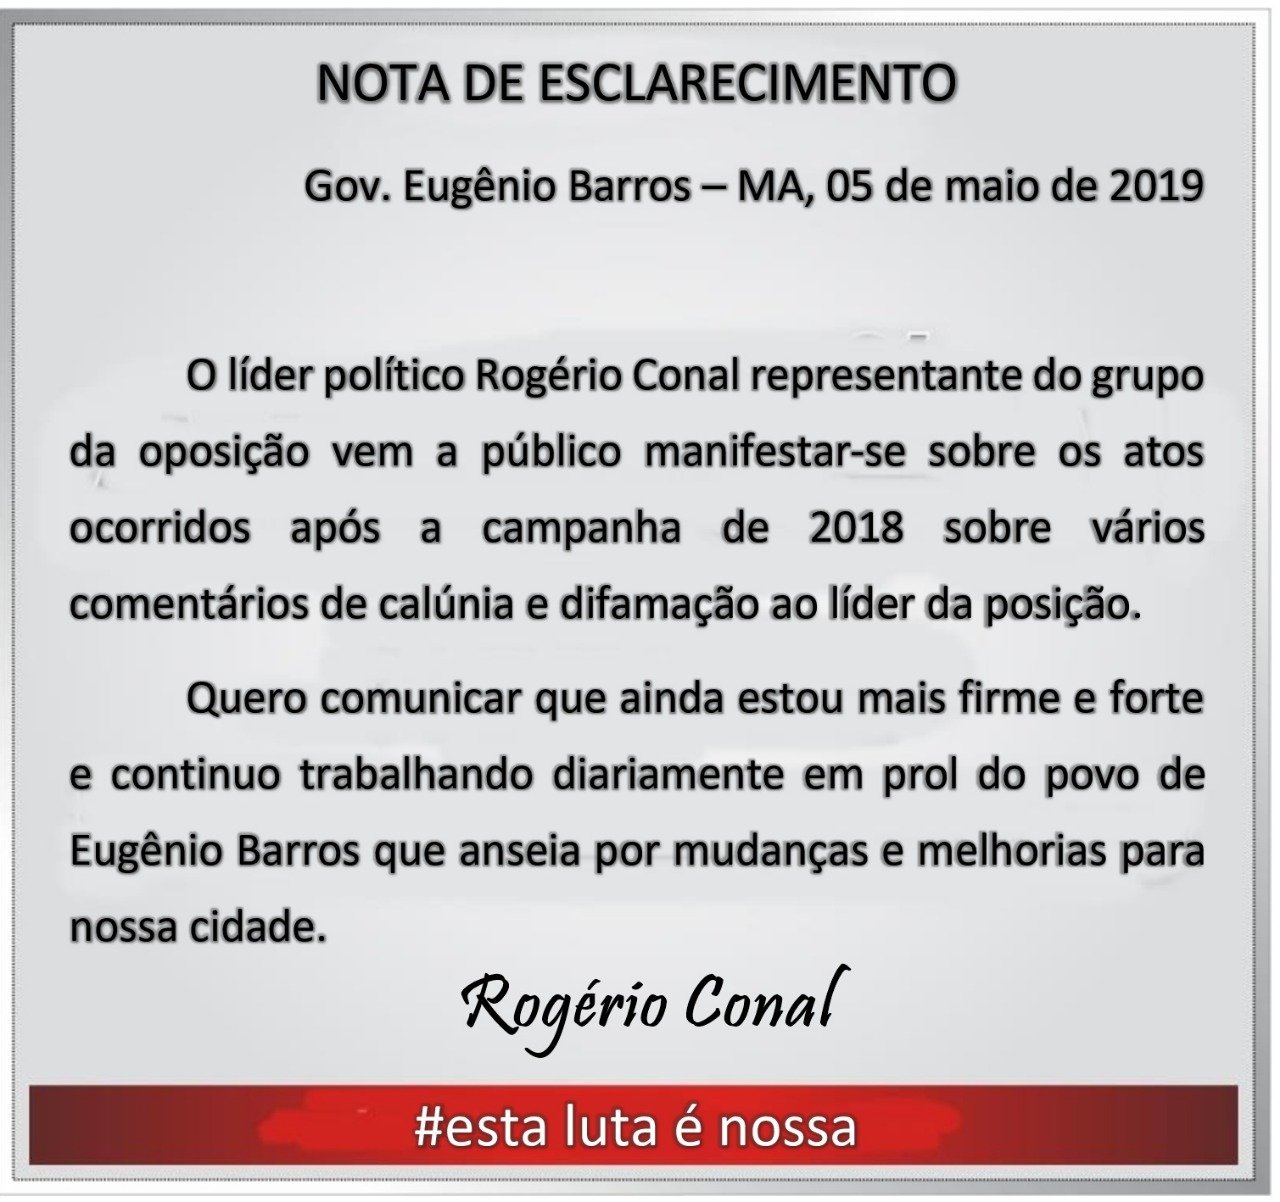 Rogério Conal, Nota de esclarecimento